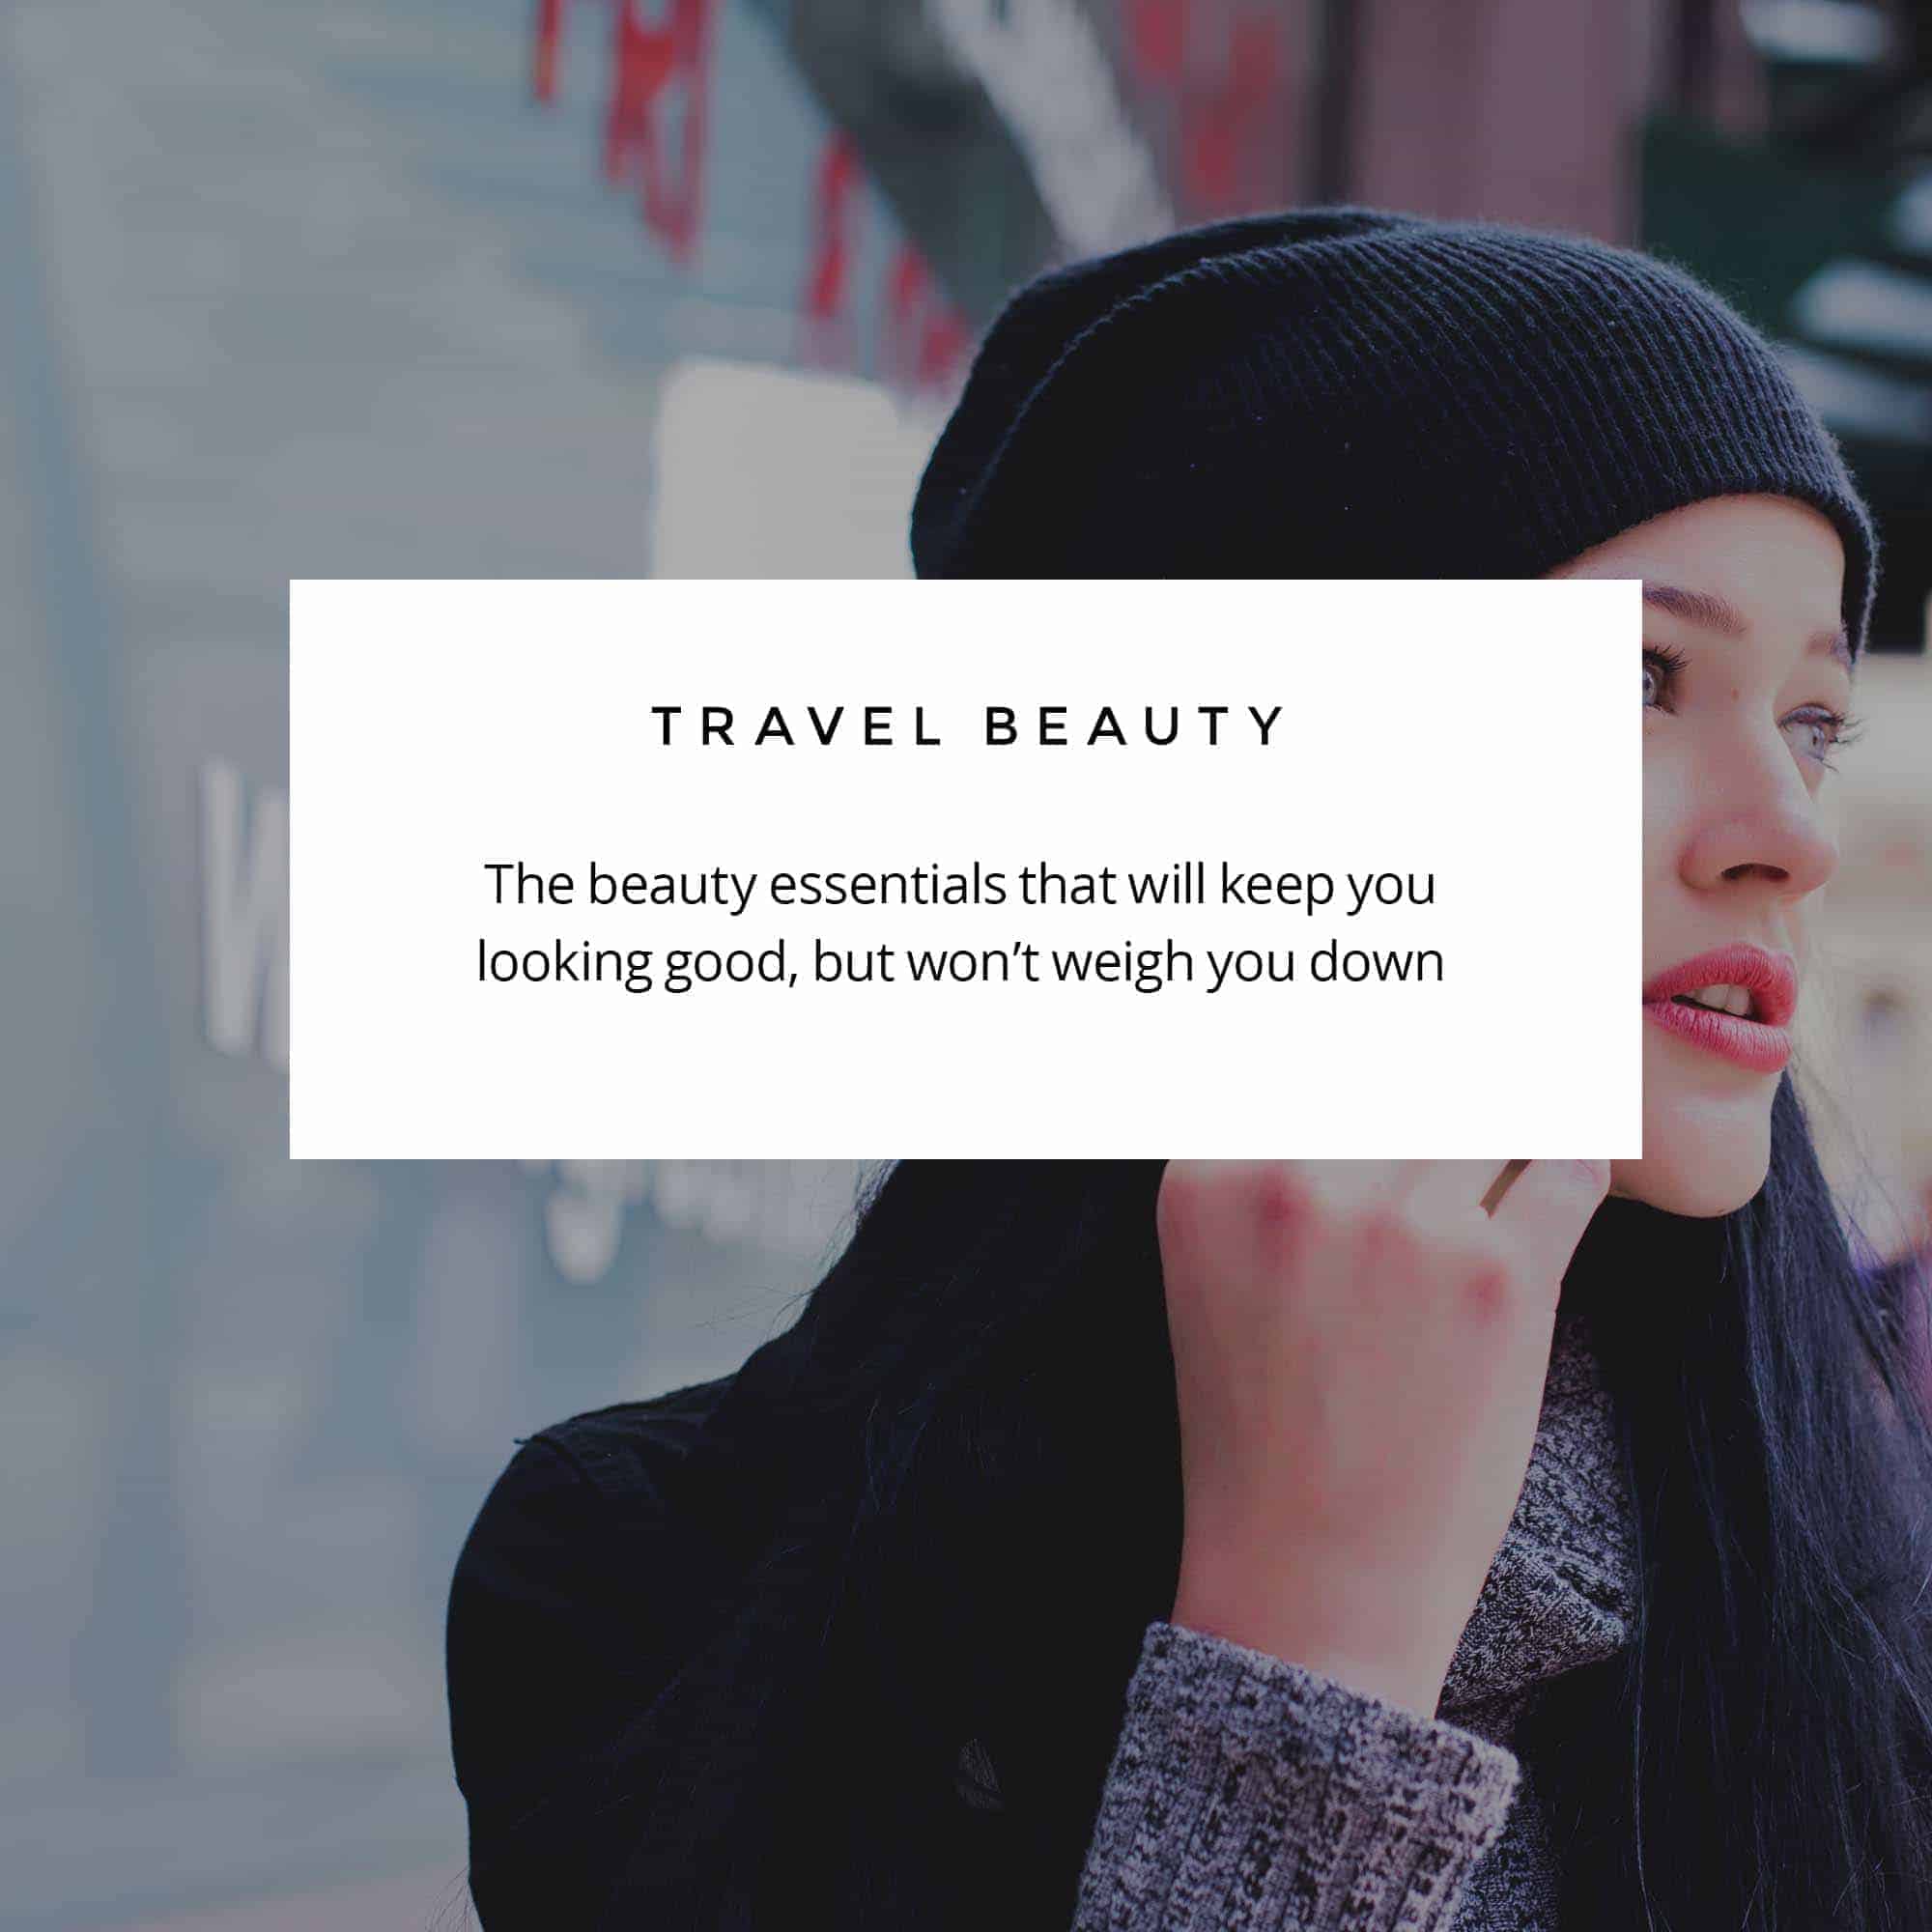 travel beauty essentials